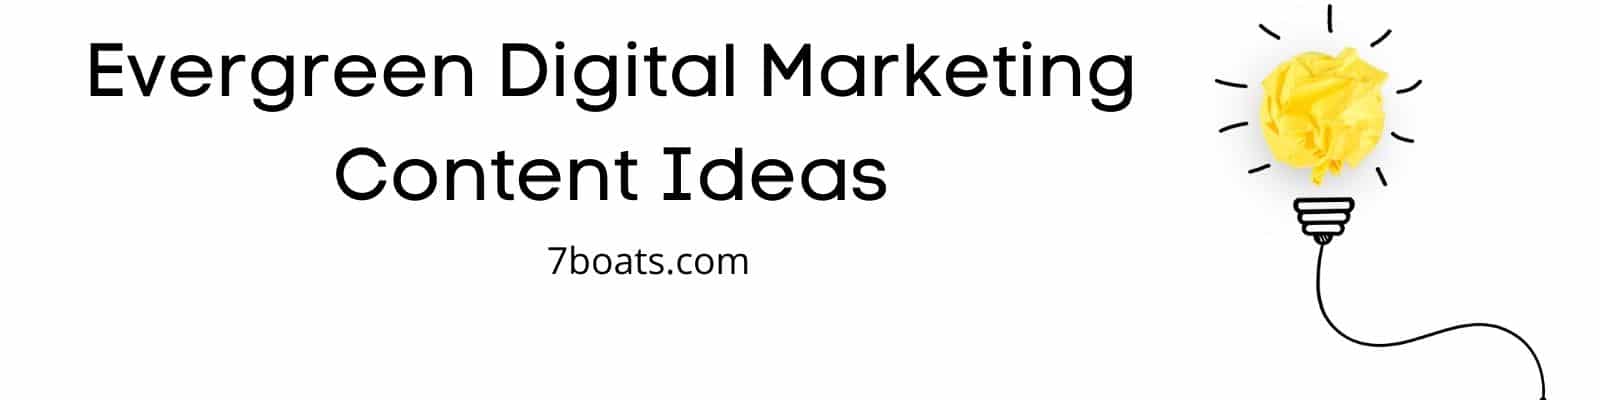 Evergreen Content Ideas: 50+ evergreen digital marketing content ideas to increase website traffic